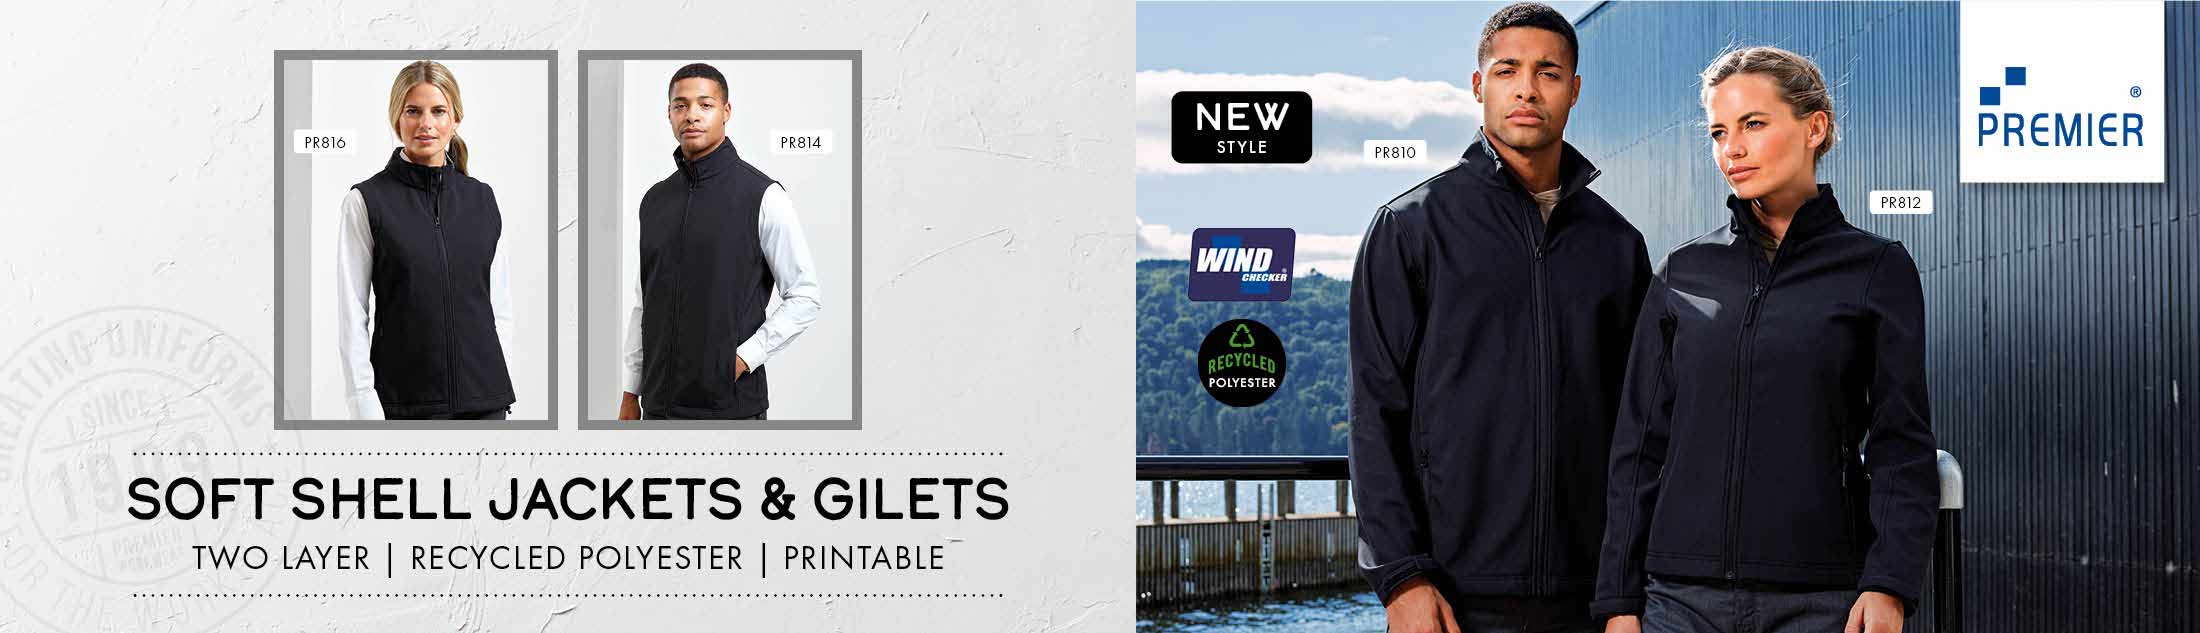 NEW Premier jacket & gilet styles